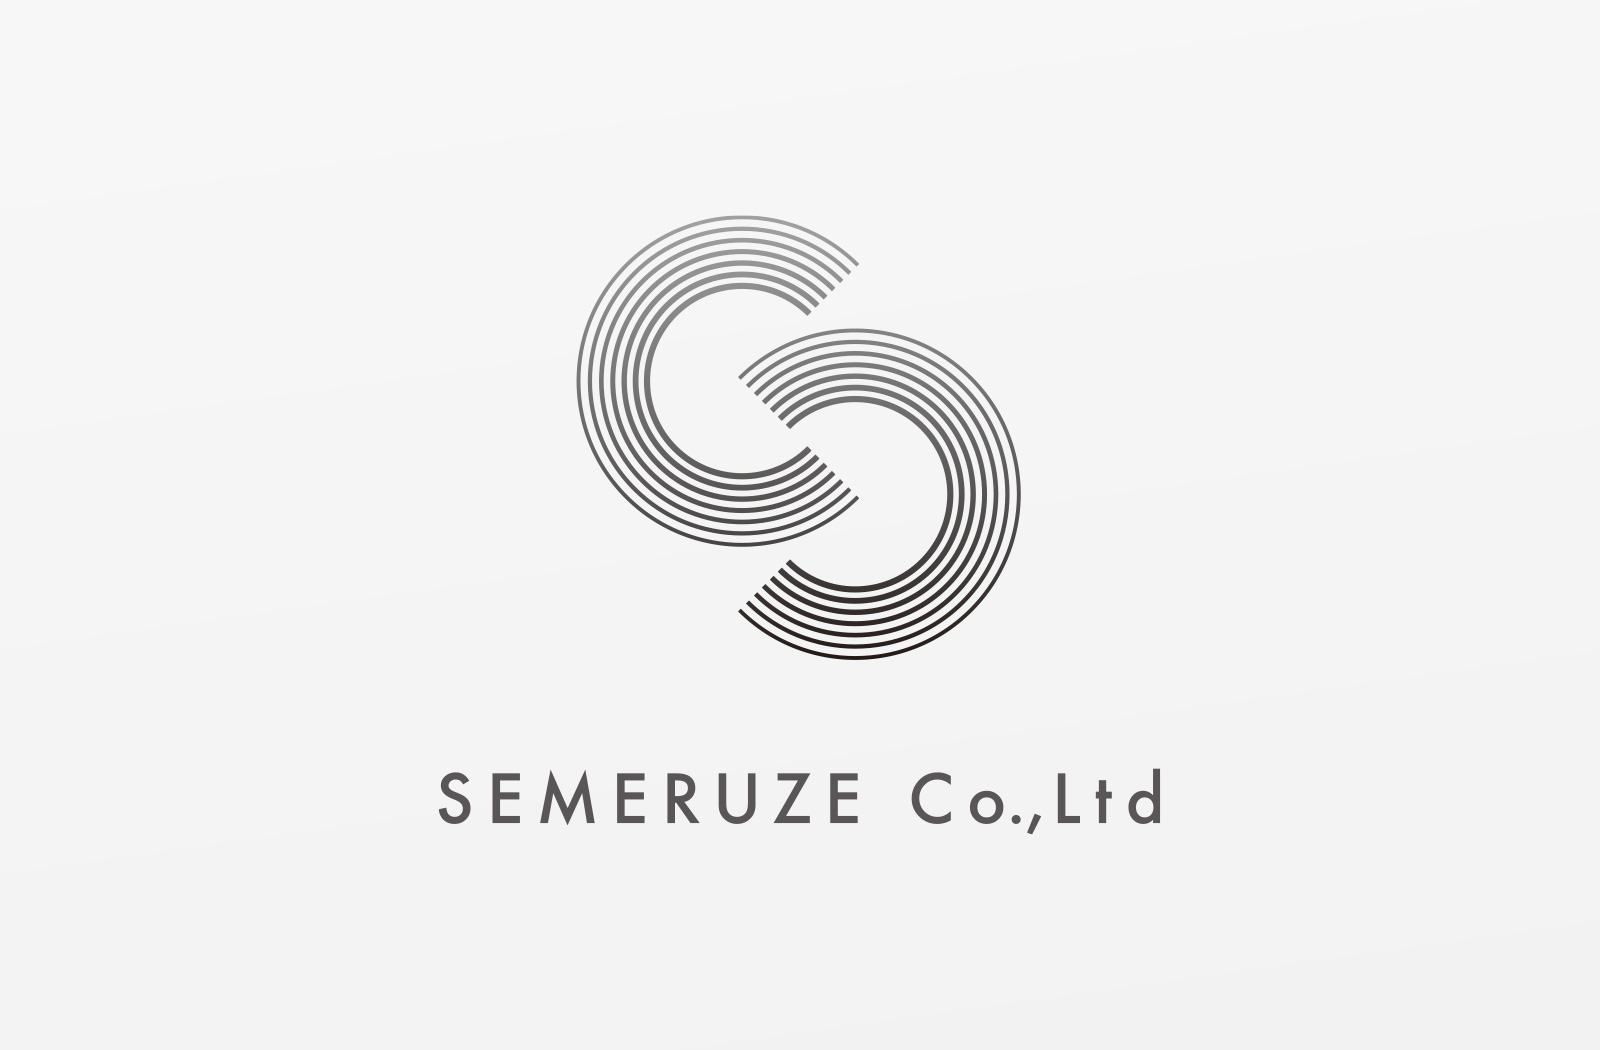 SEMERUZE Co.,Ltd　ロゴ